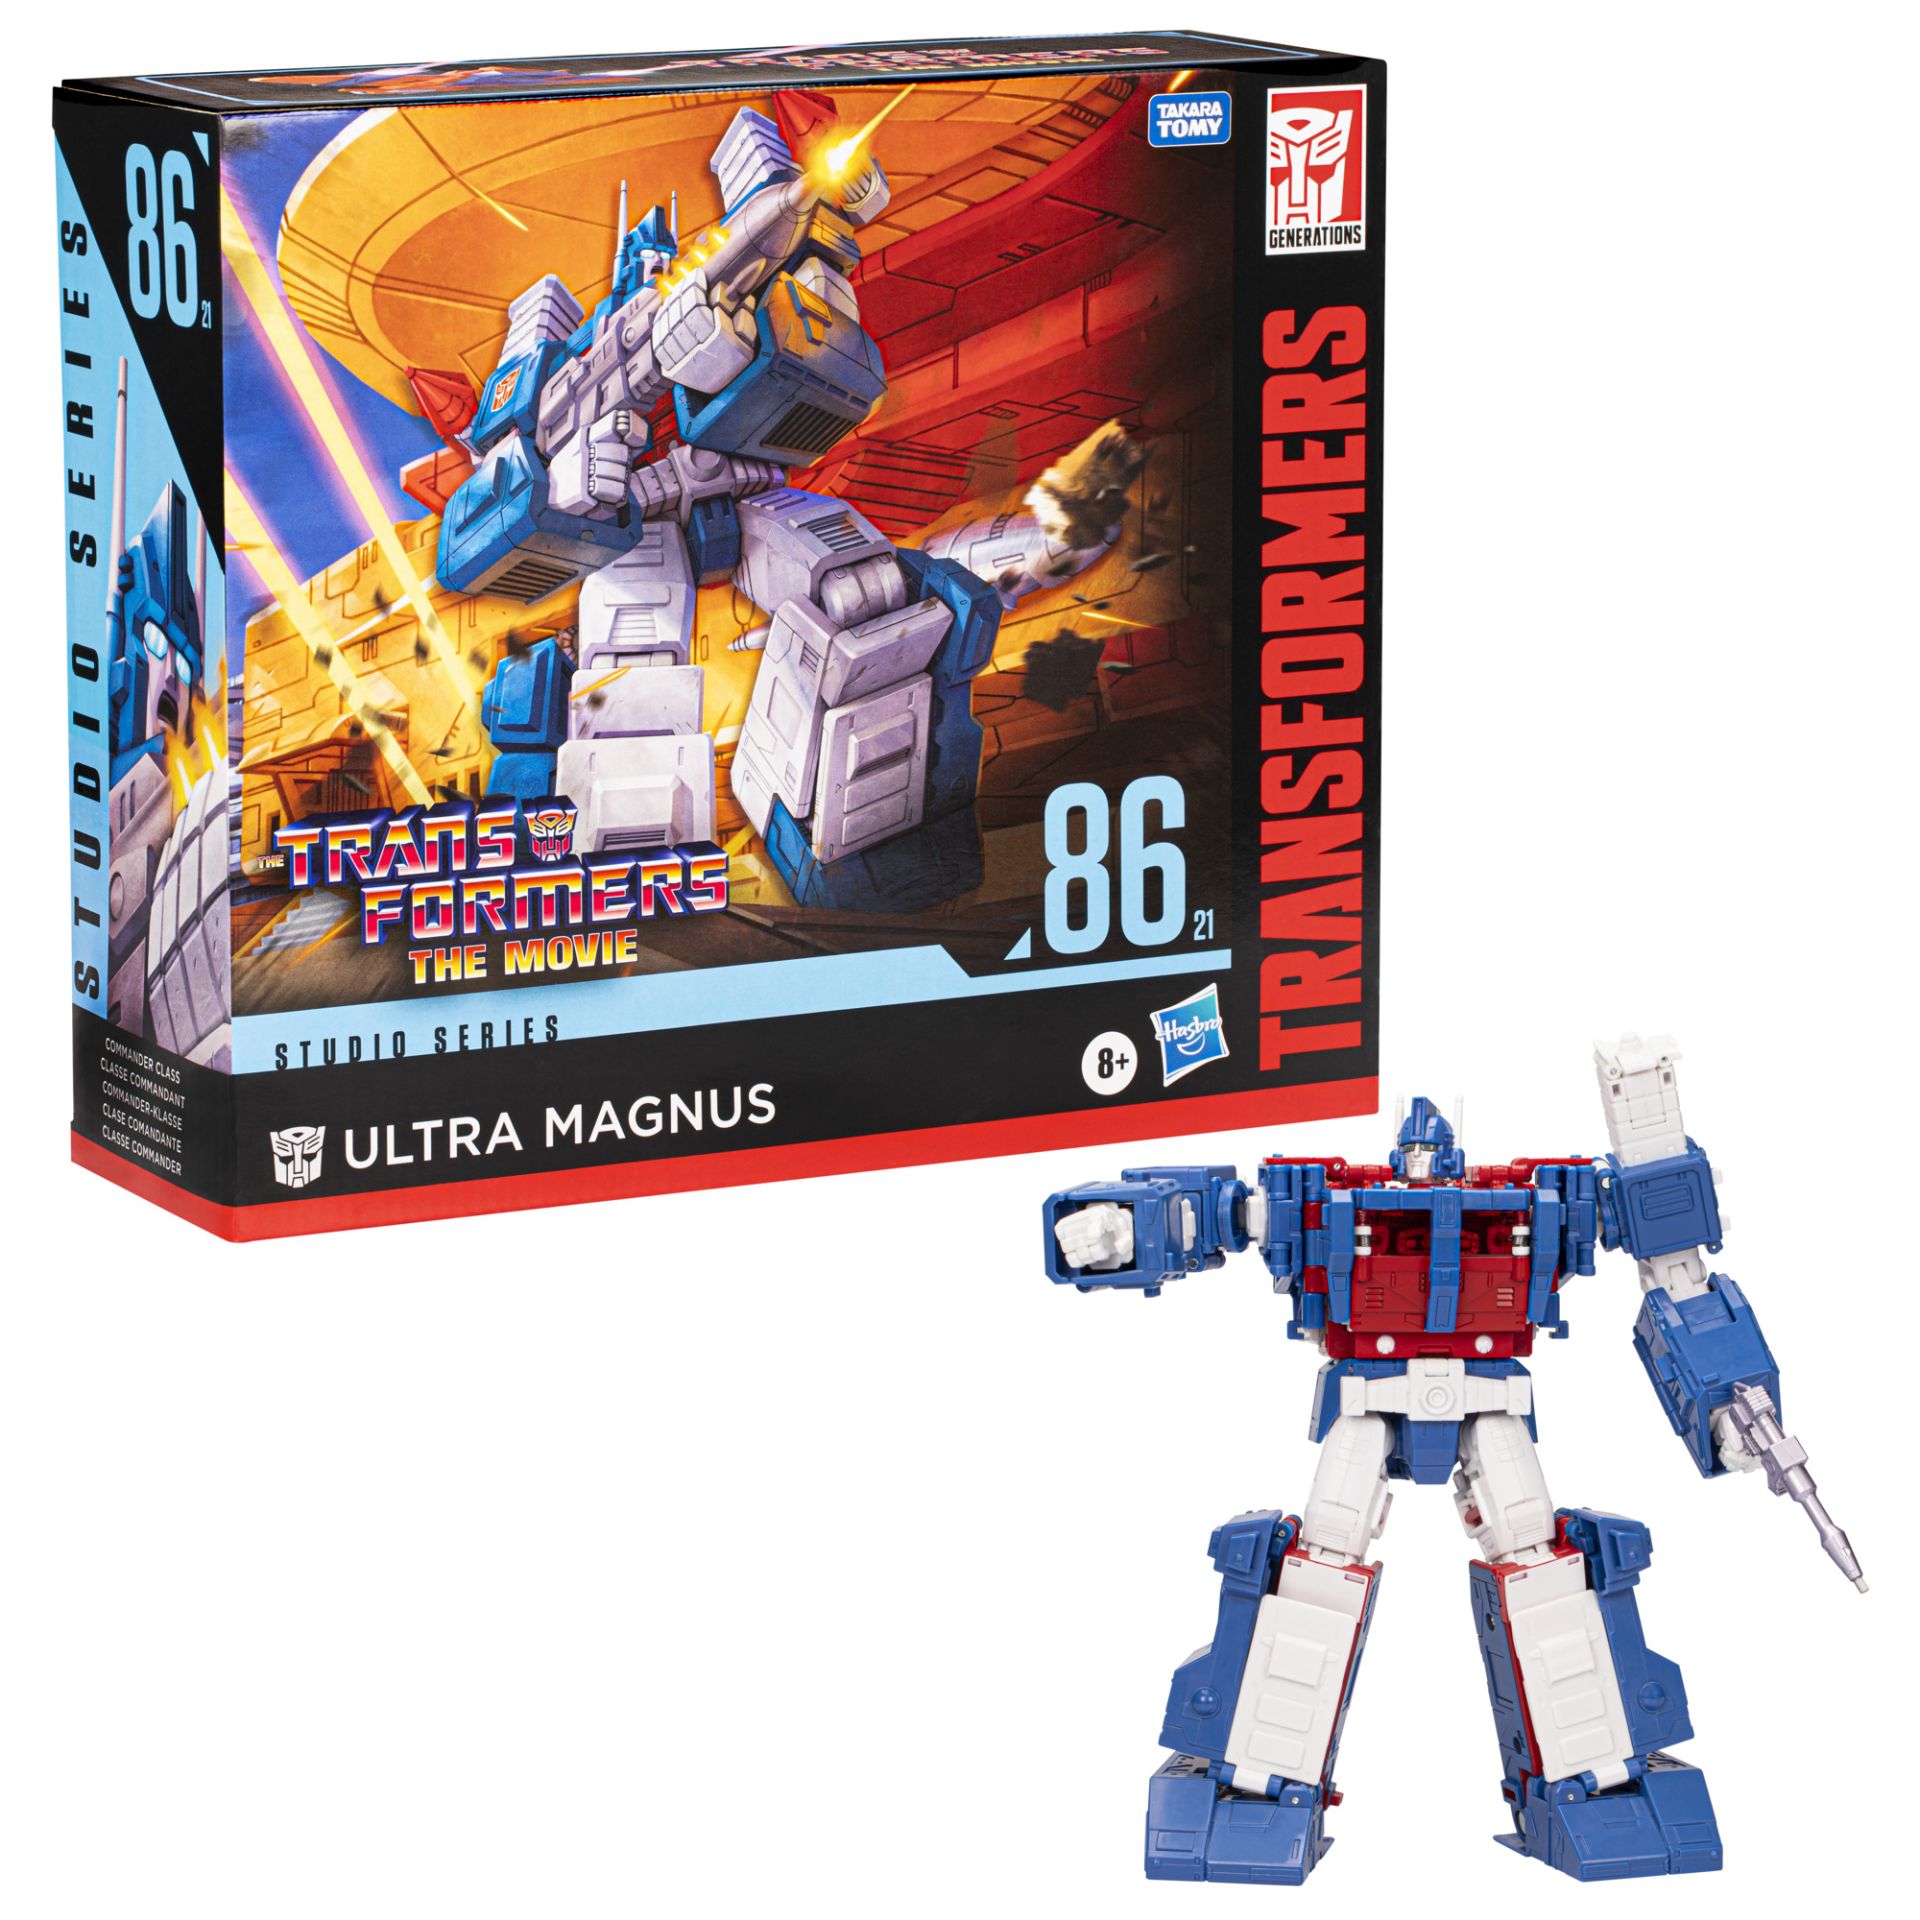 Transformers Toys Studio Series 指揮官級《變形金剛：電影版》86-21 